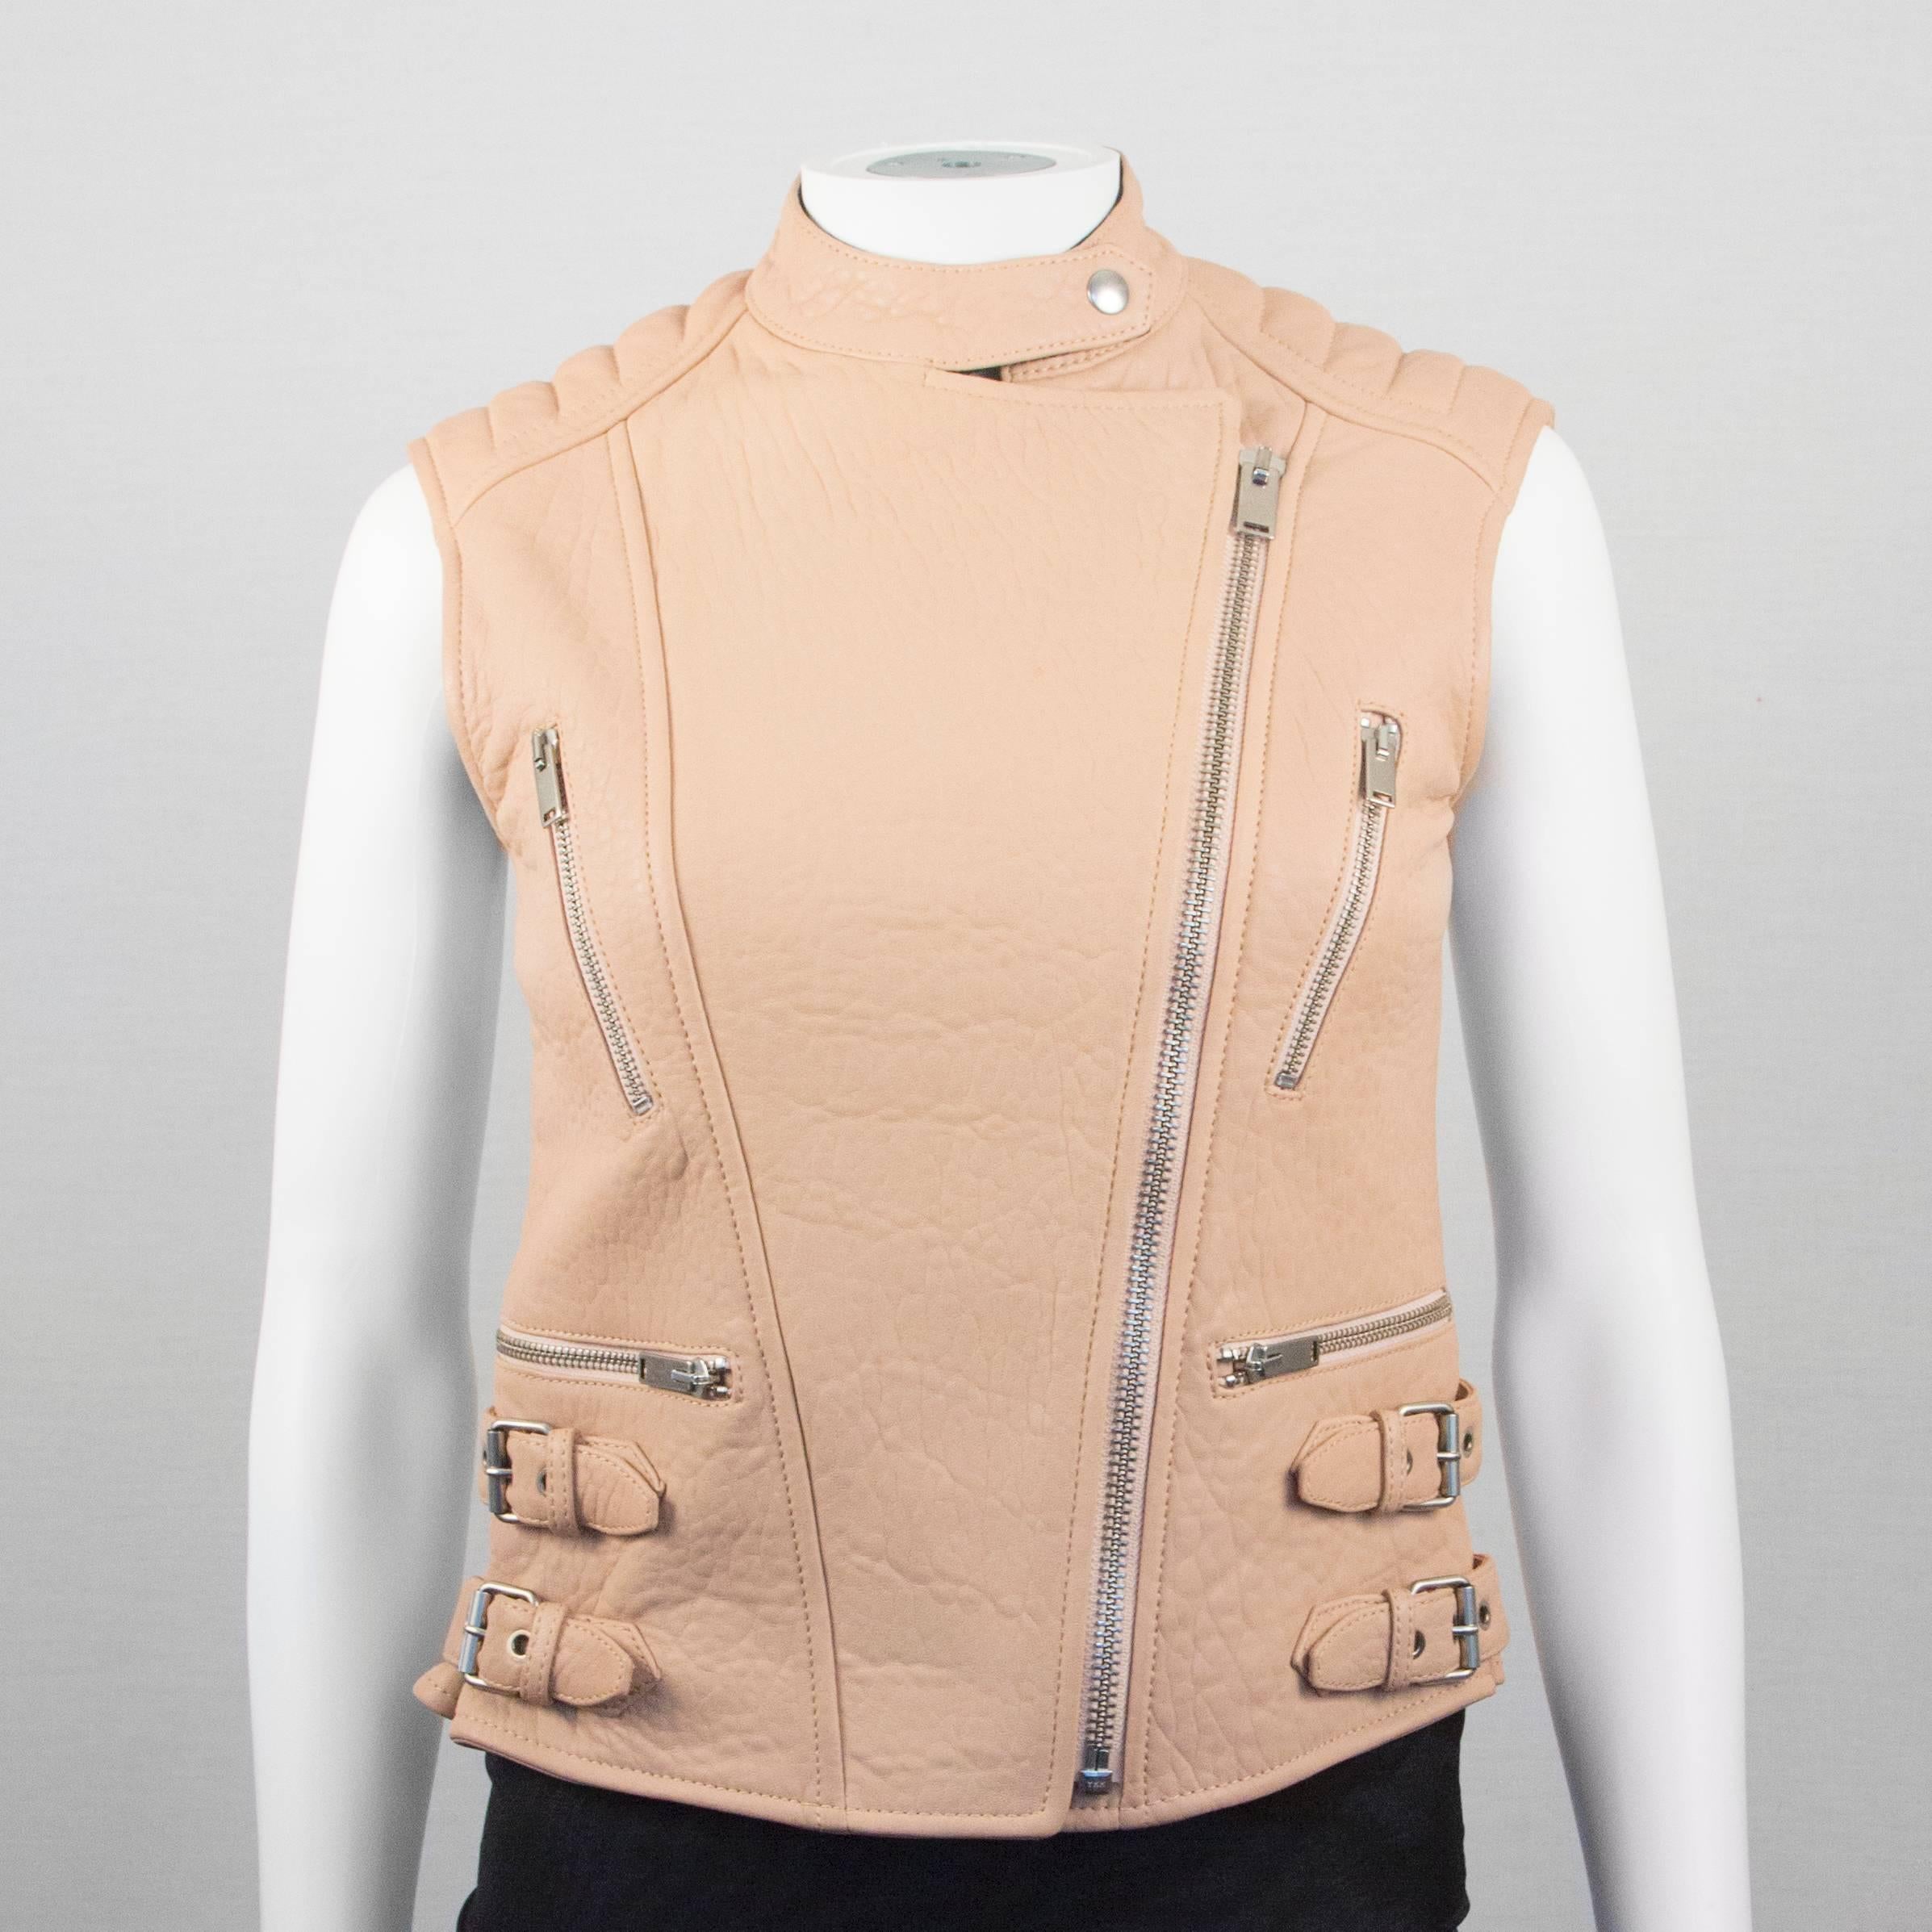 Brand New:

Celine - Tan Leather Biker Vest 

Estimated Retail: $6500.00 

Color: Tan

Material: Leather (Shell) - Viscose (Lining)

Size:  38 - US 4 / 6

------------------------------------------------------------

Details:

-